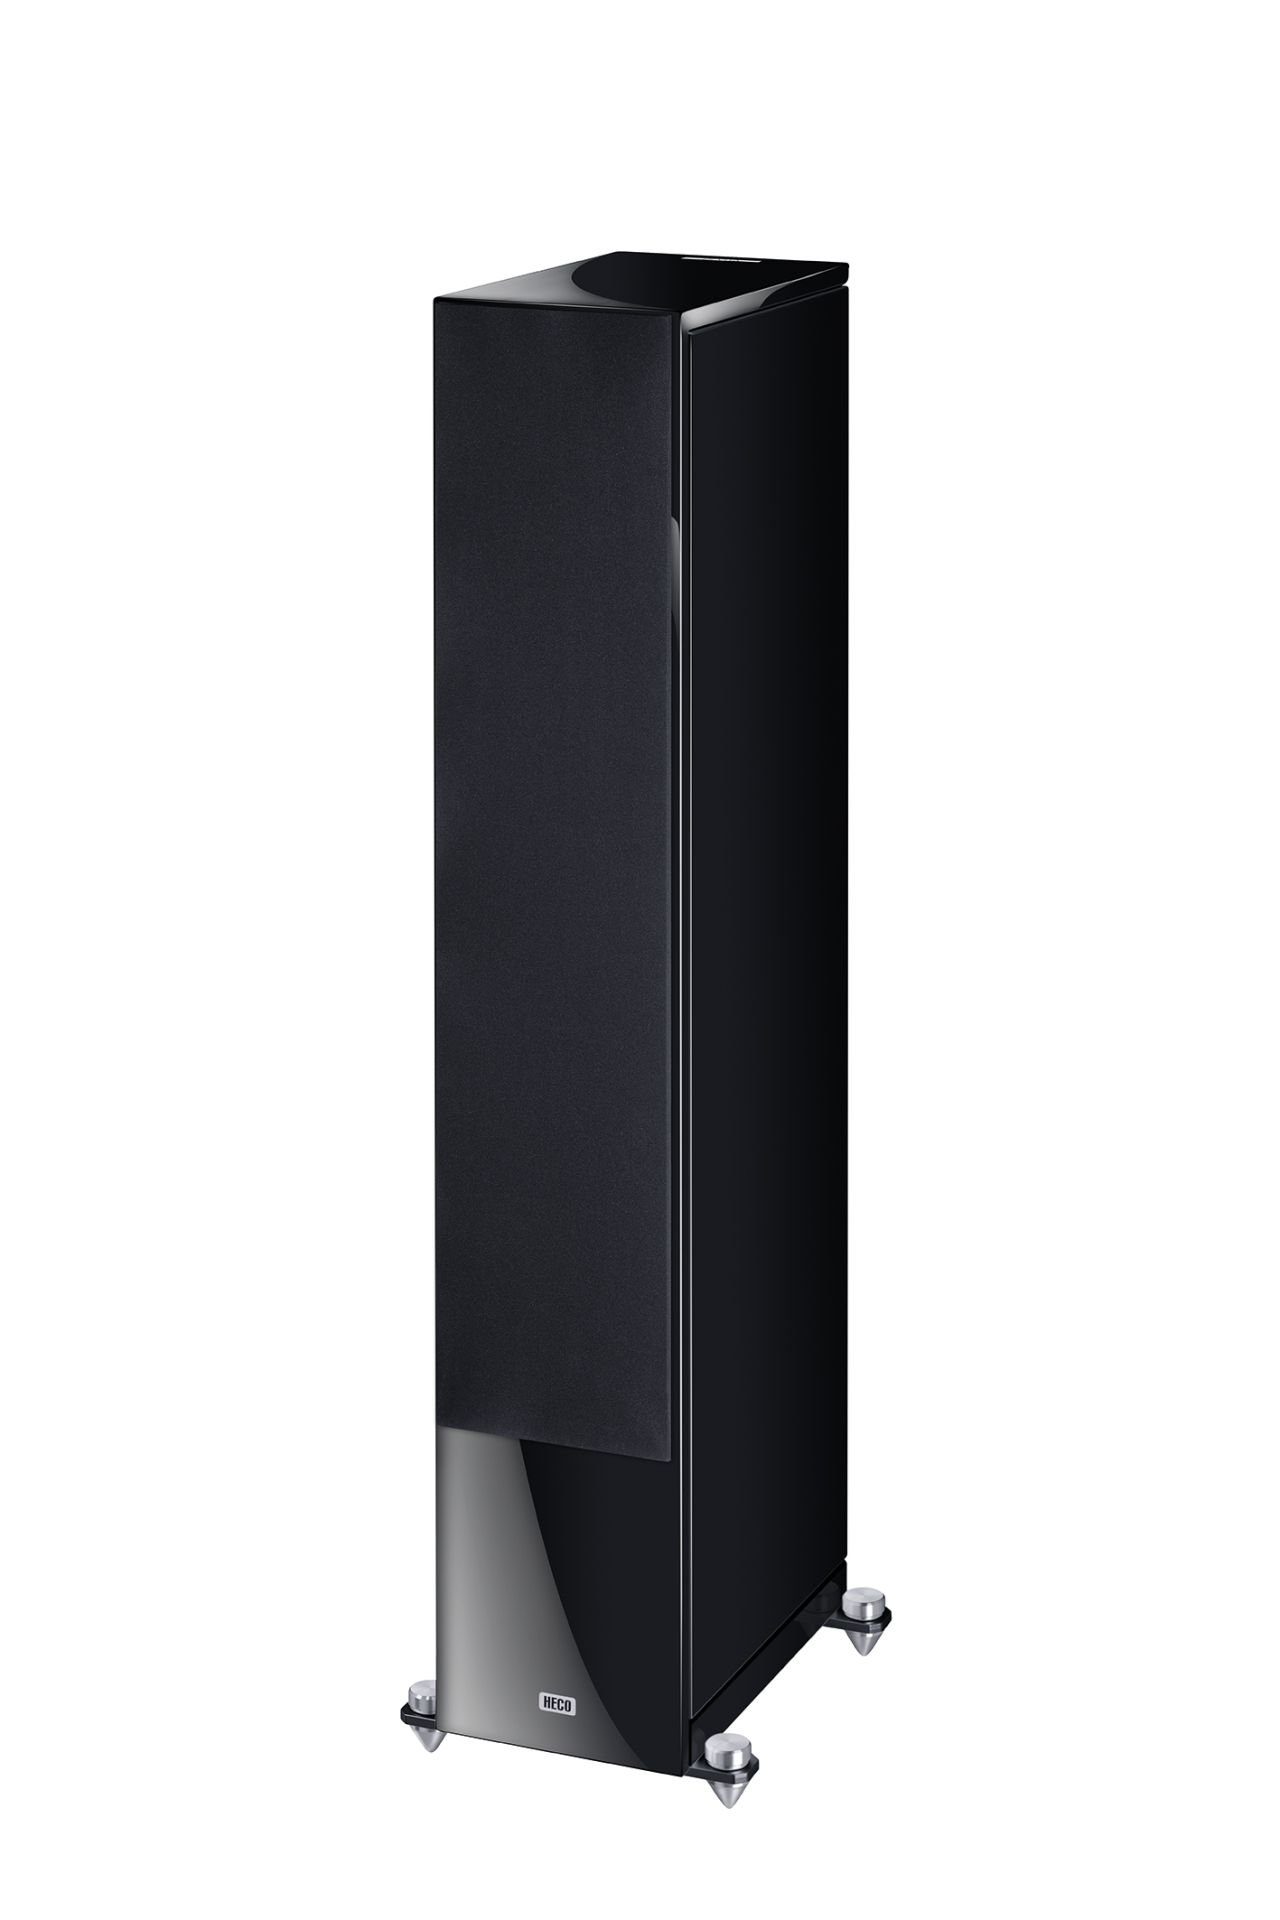 Heco Heco In Vita 9 Standlautsprecher (Stückpreis) schwarz Stand-Lautsprecher